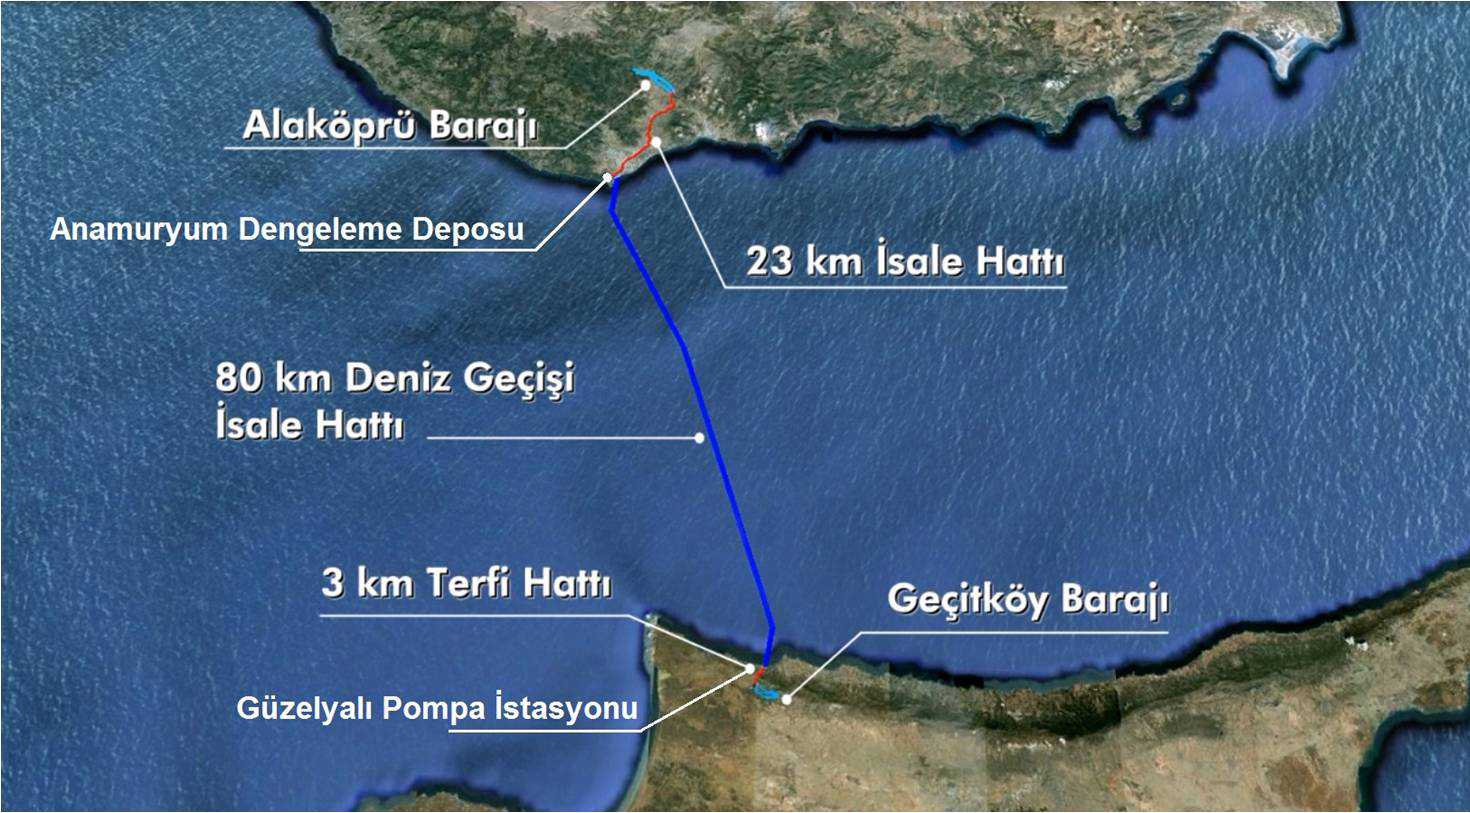 Kıbrıs'ta AKP'nin su rantı kavgası